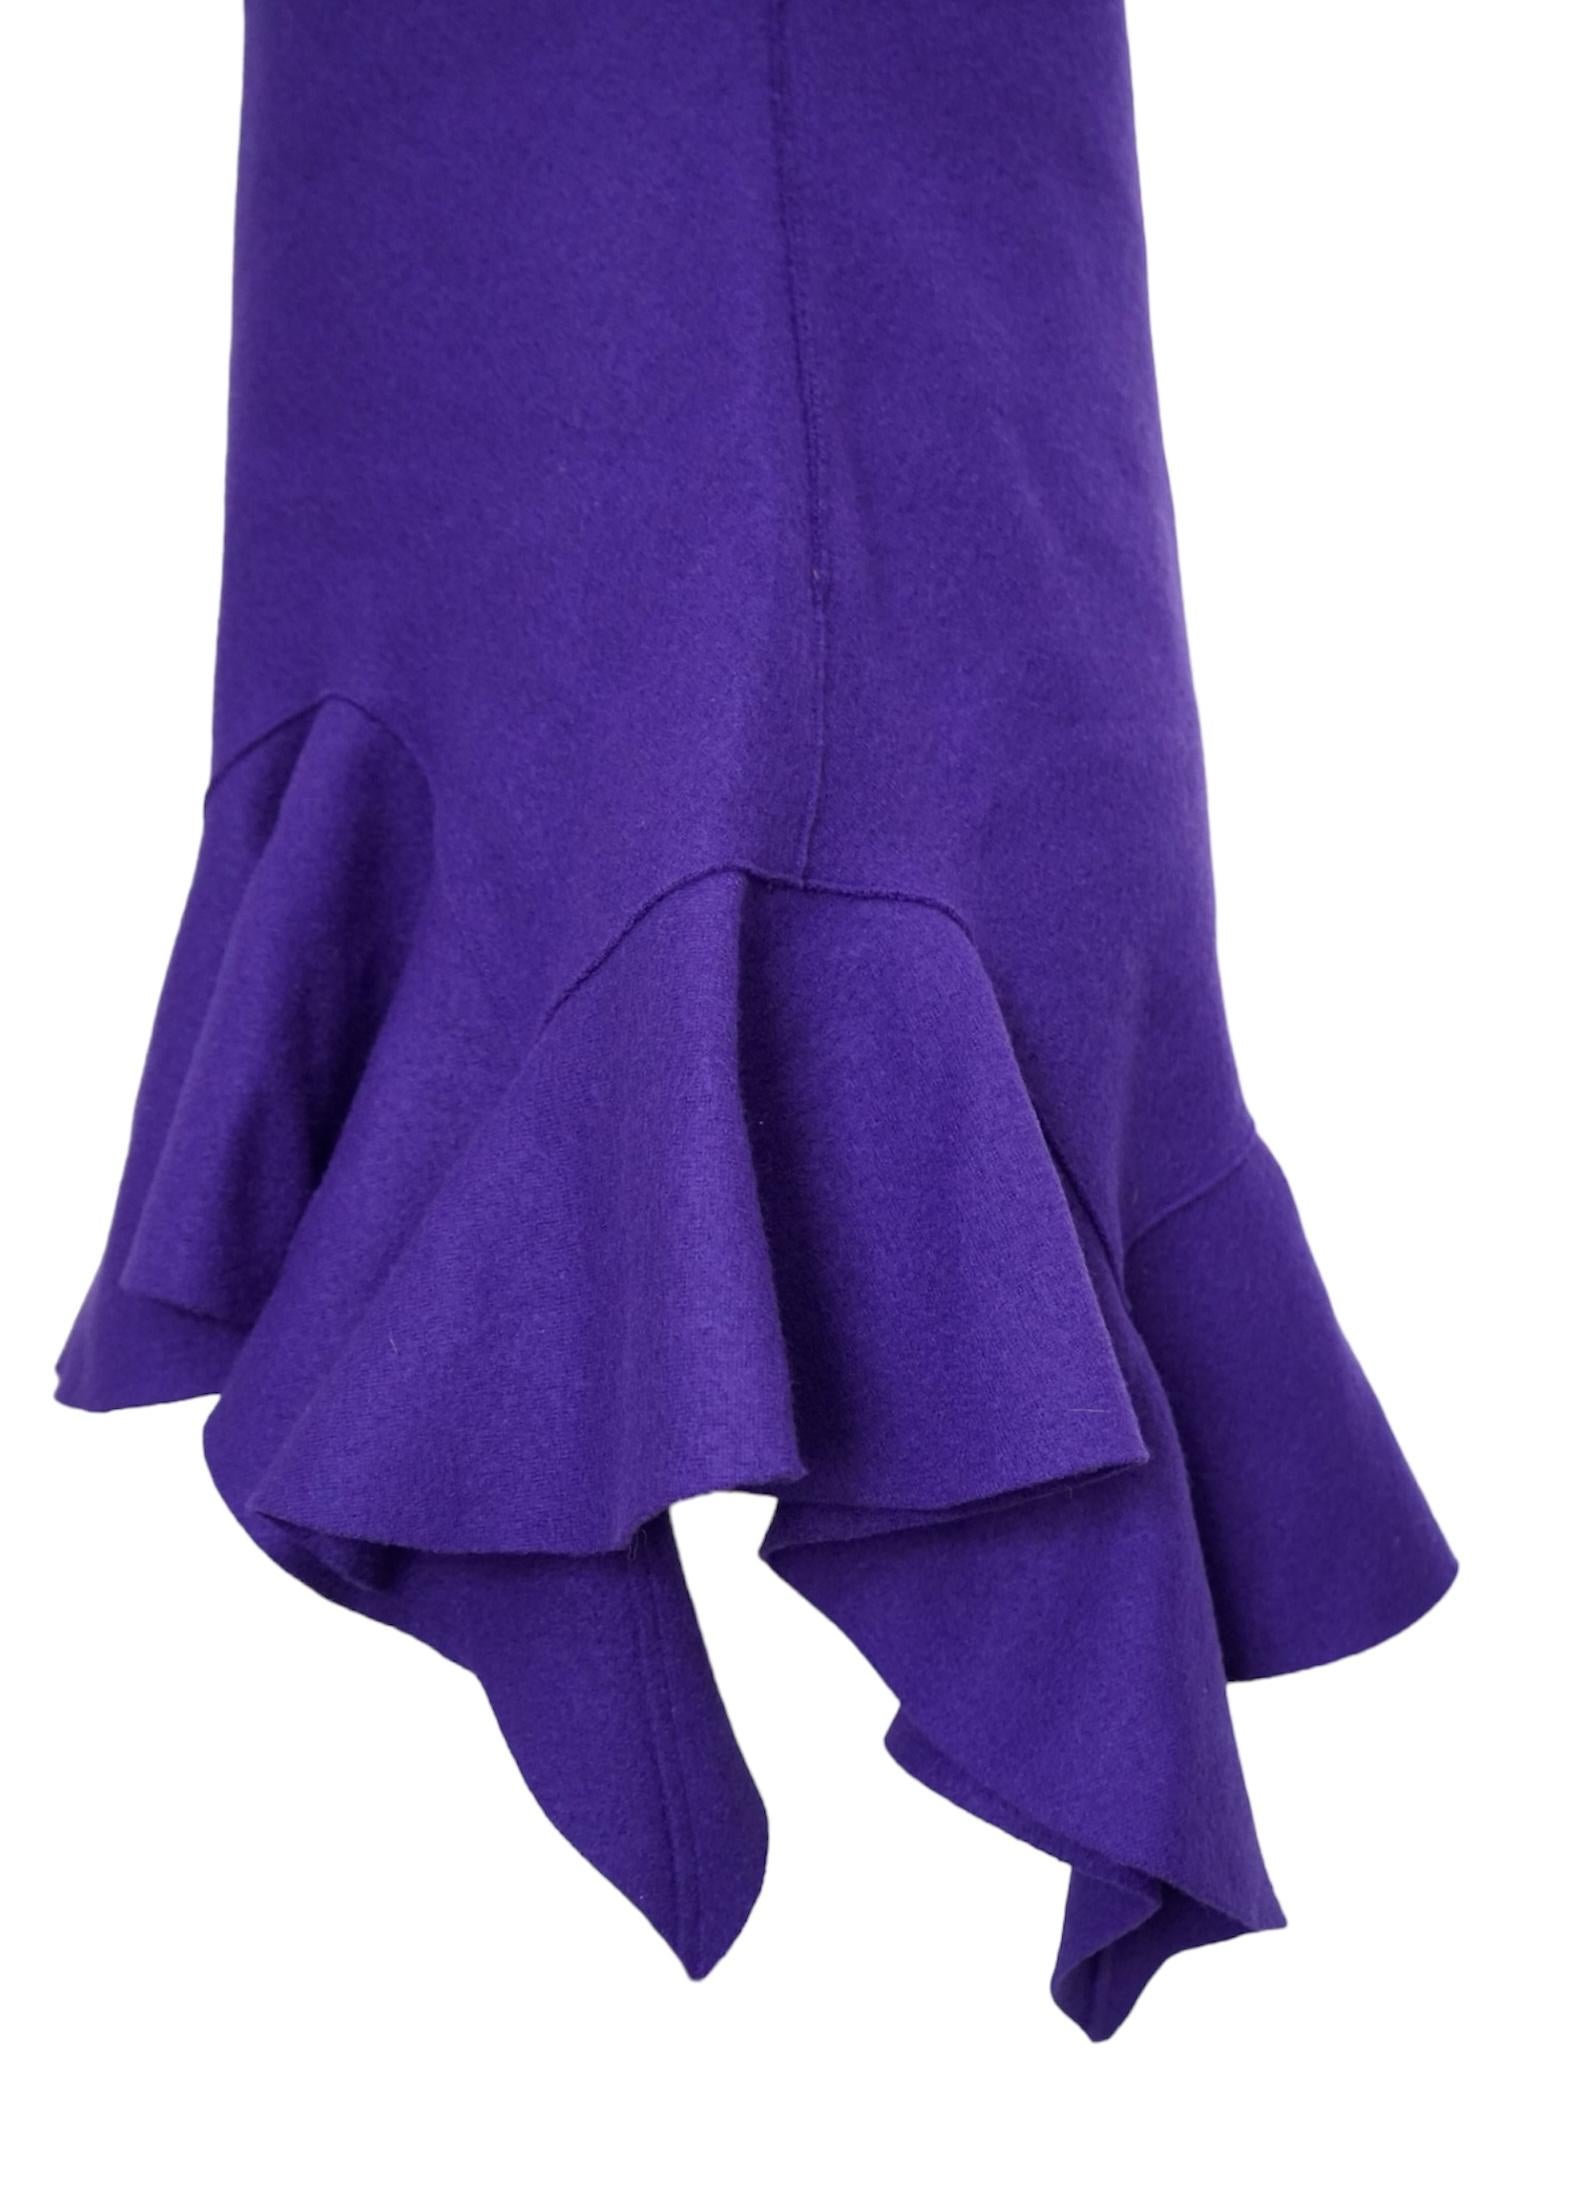 Givenchy Ruffle Wool Purple Mini Dress sz M For Sale 3